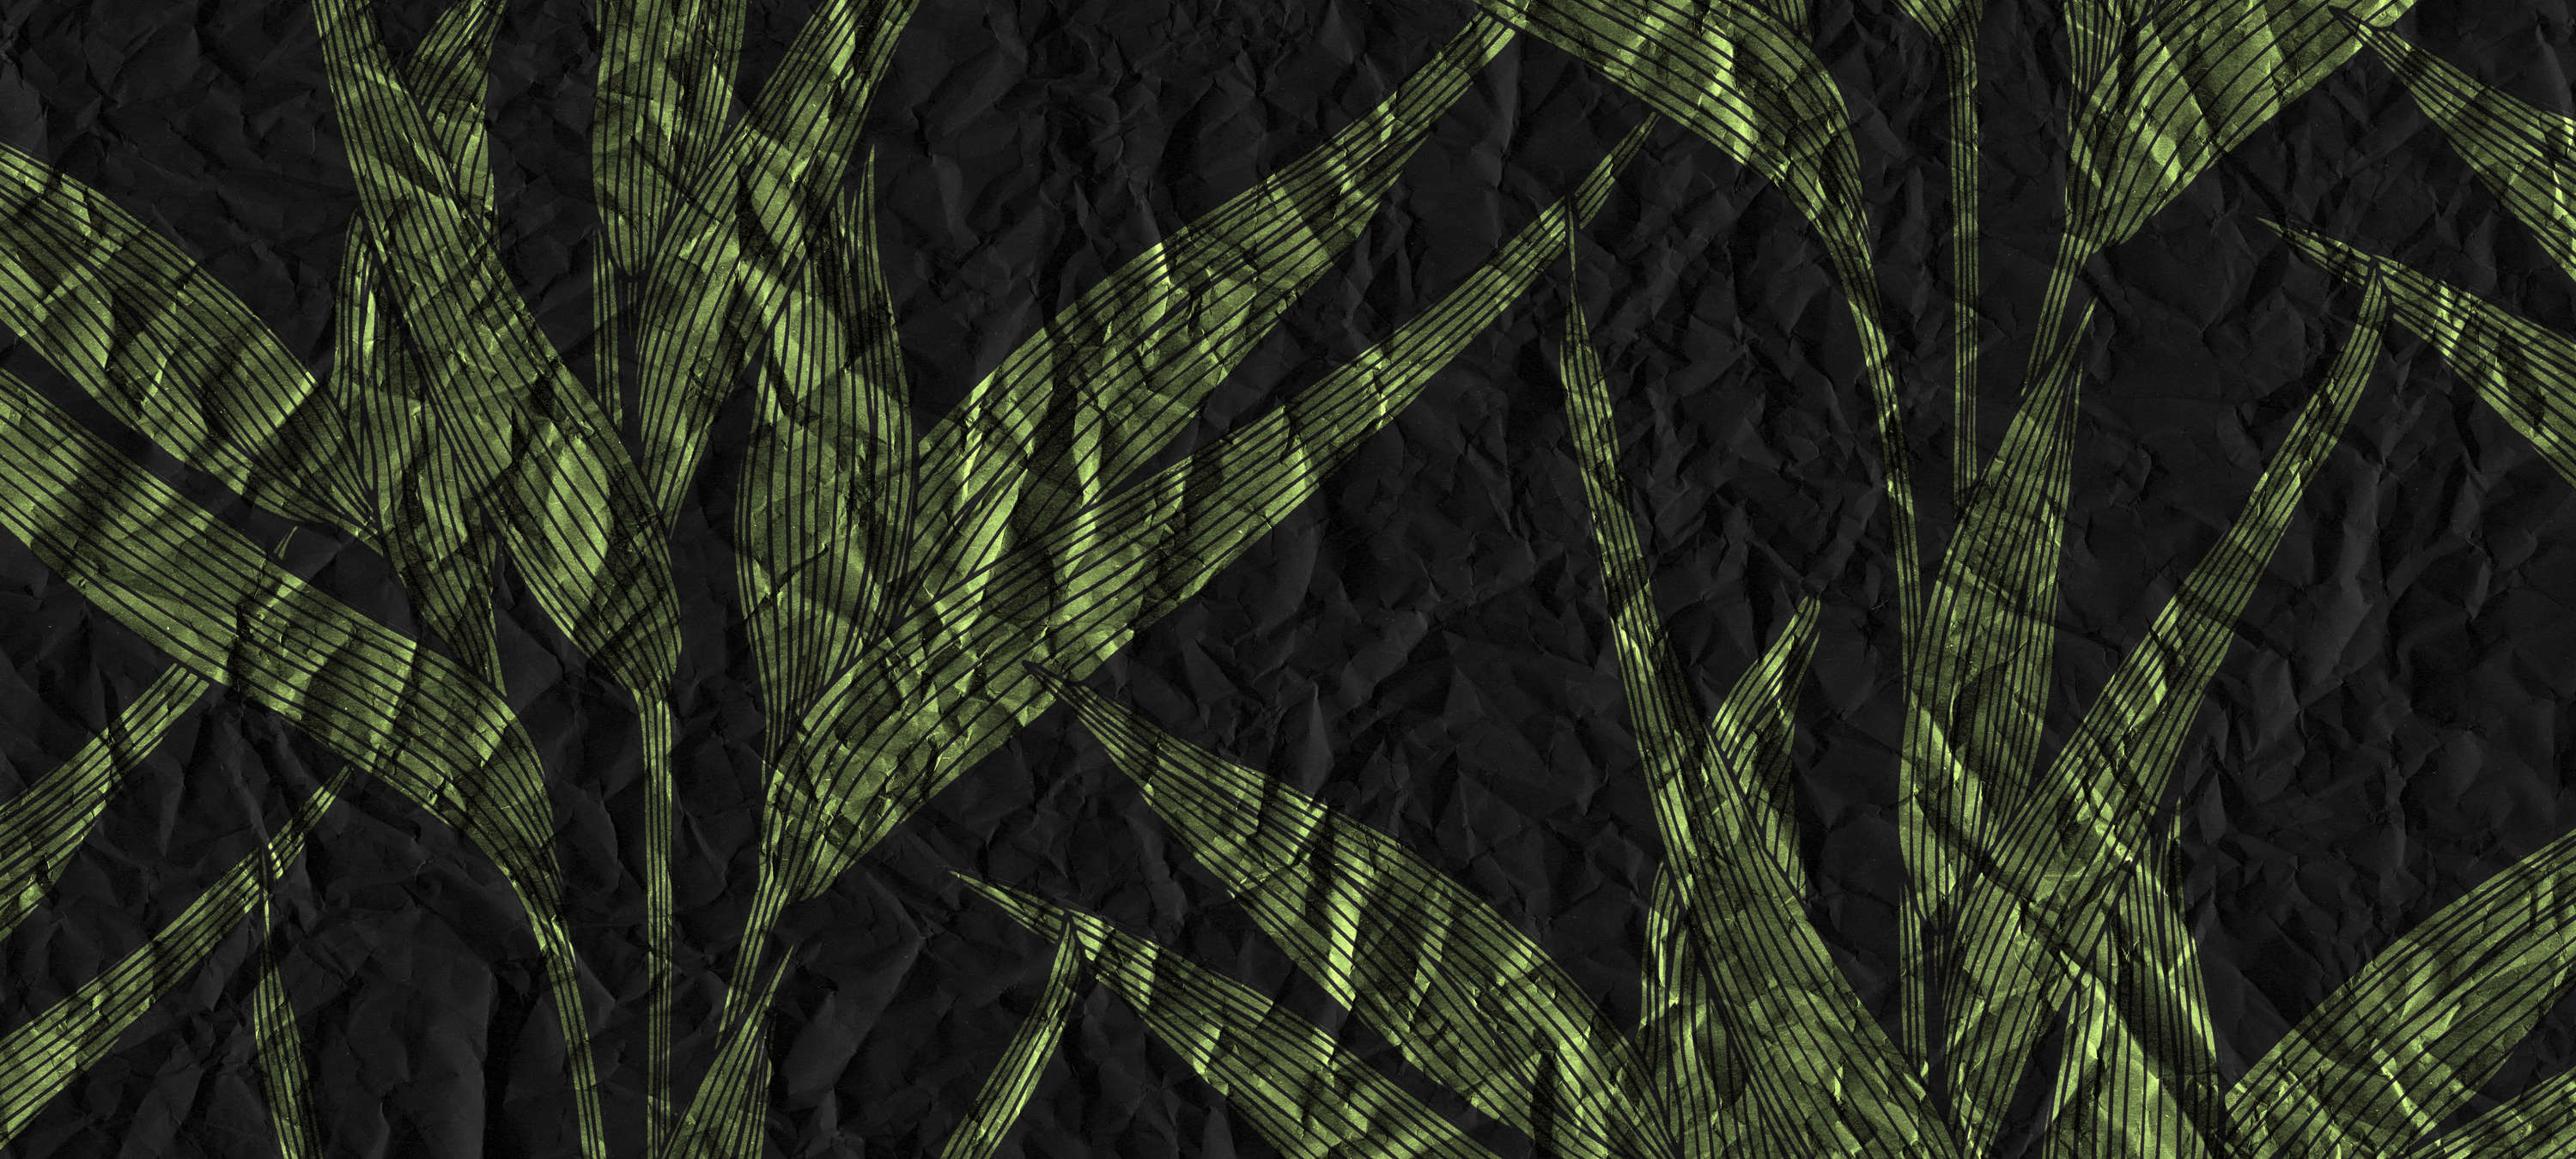             Dark Leaves Behang met Papier Optiek - Groen, Zwart
        